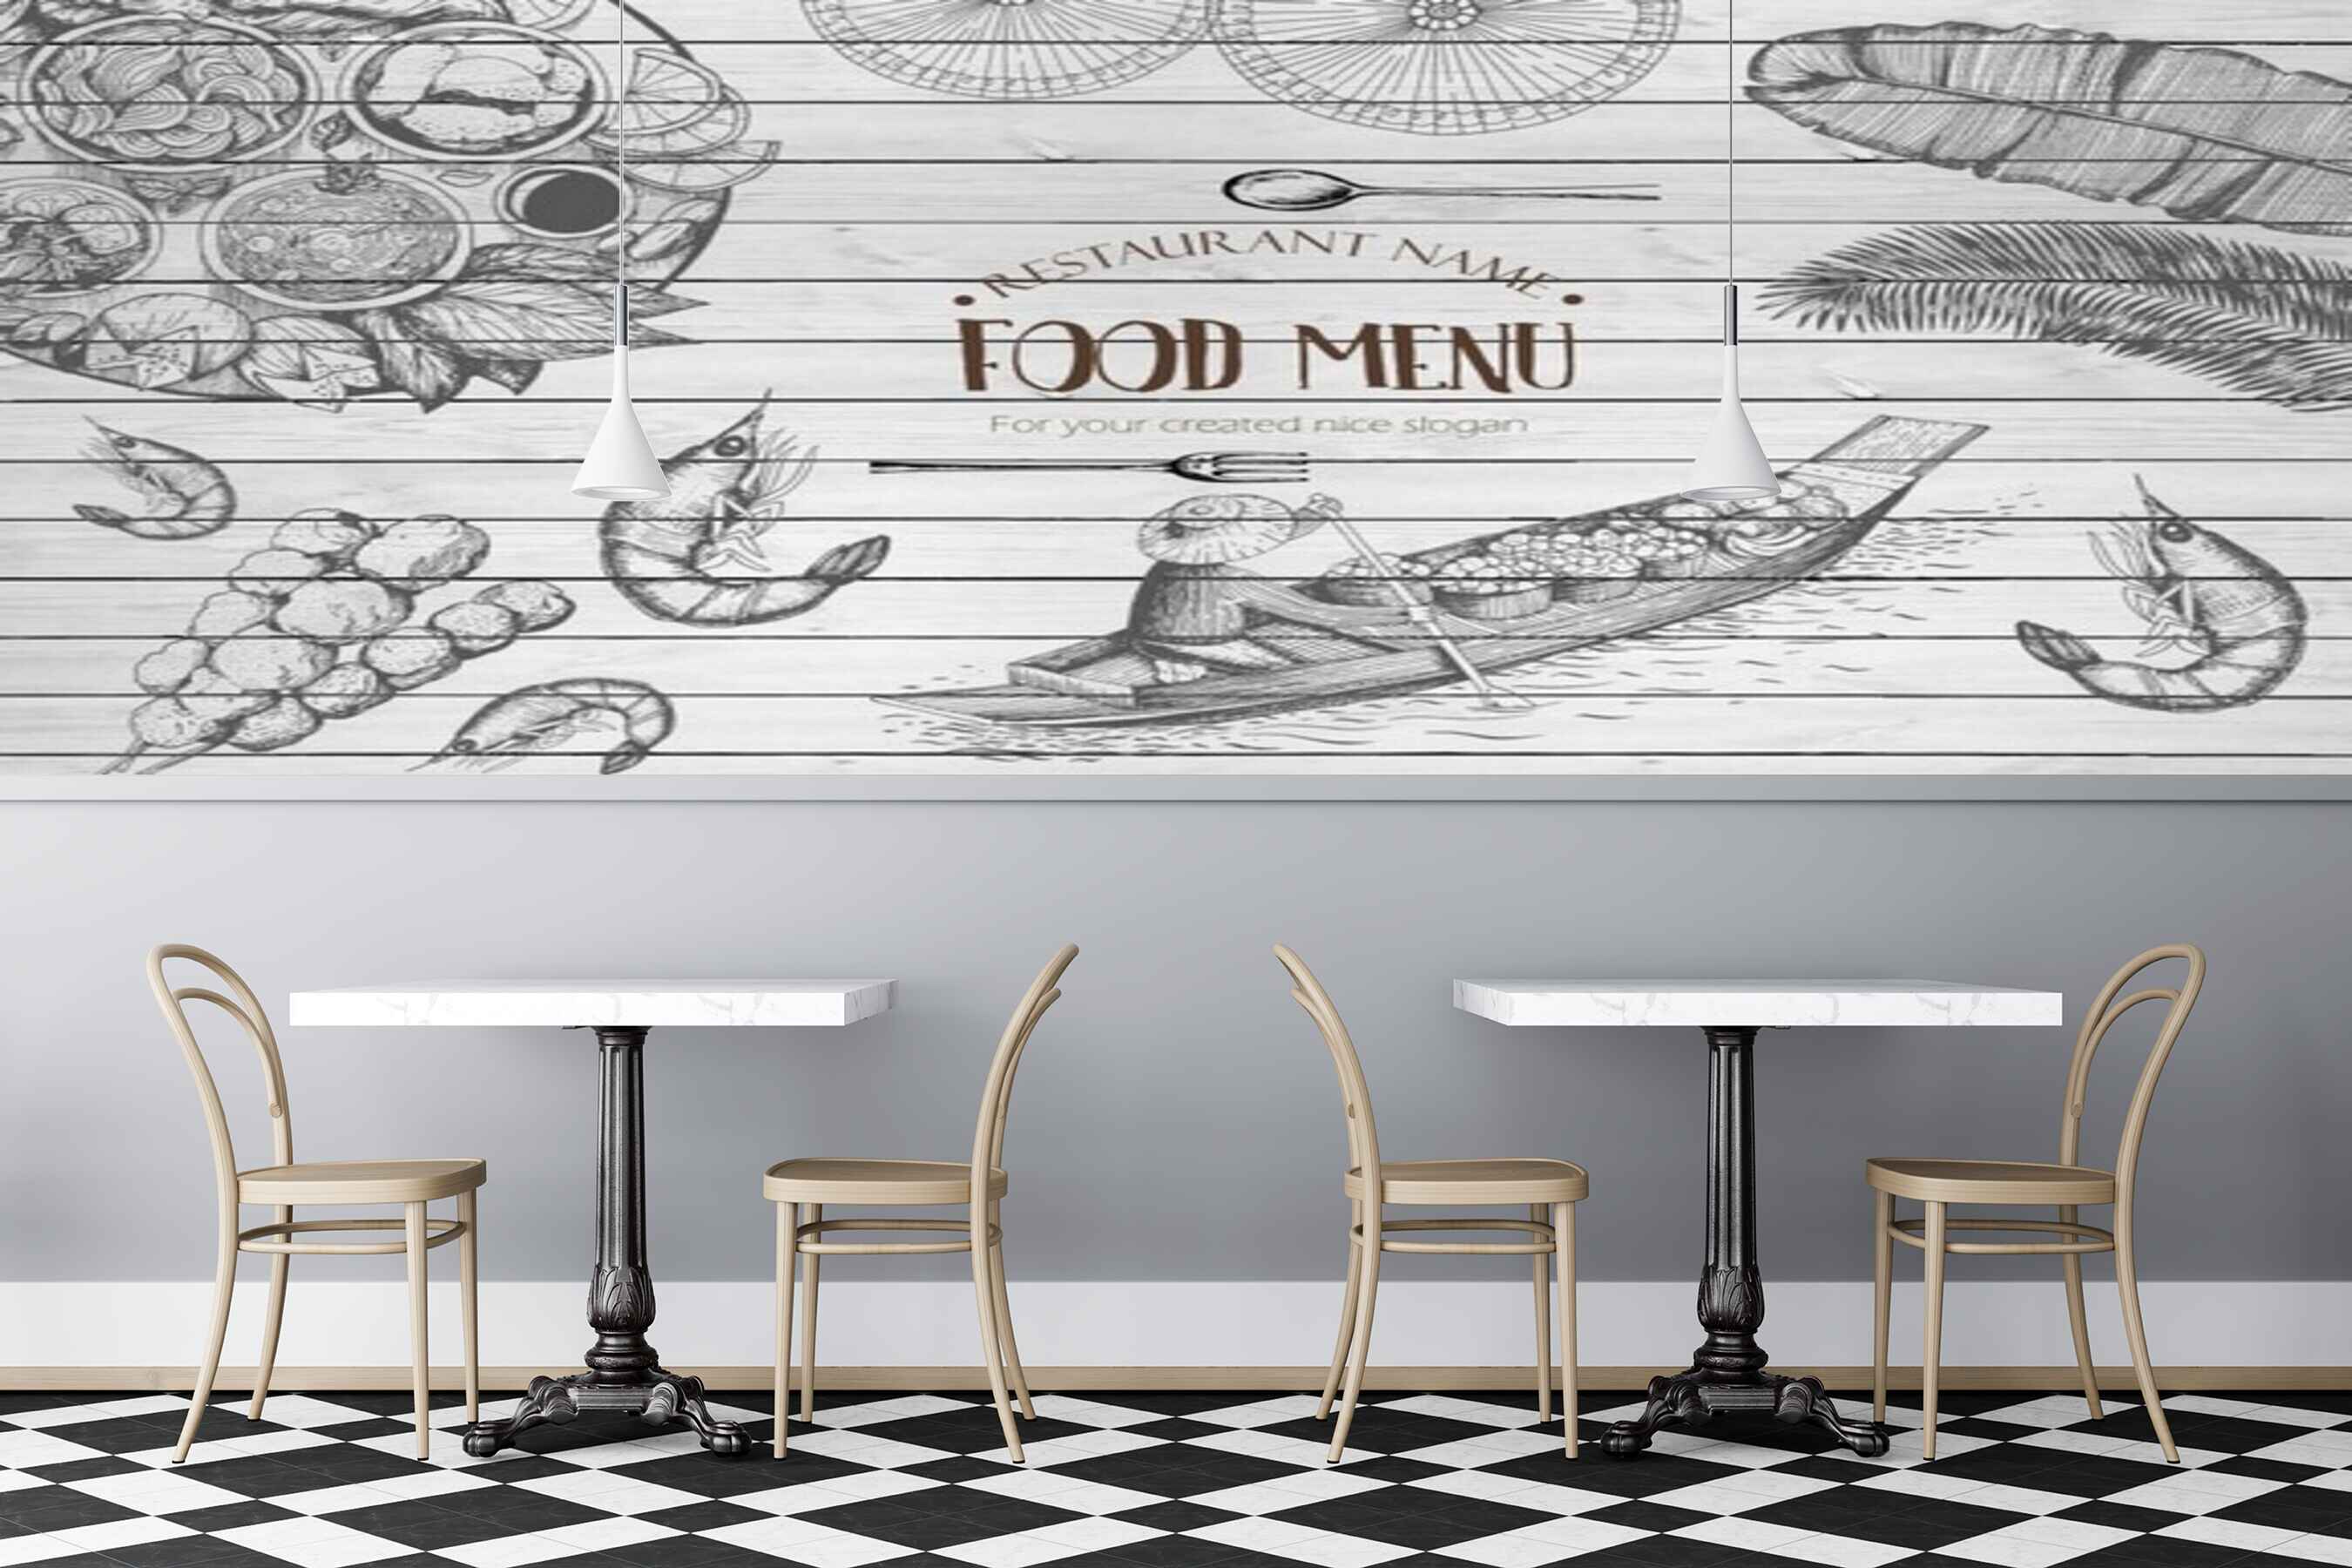 Avikalp MWZ3140 Food Menu Boat Prawns Dishes Leaves HD Wallpaper for Cafe Restaurant